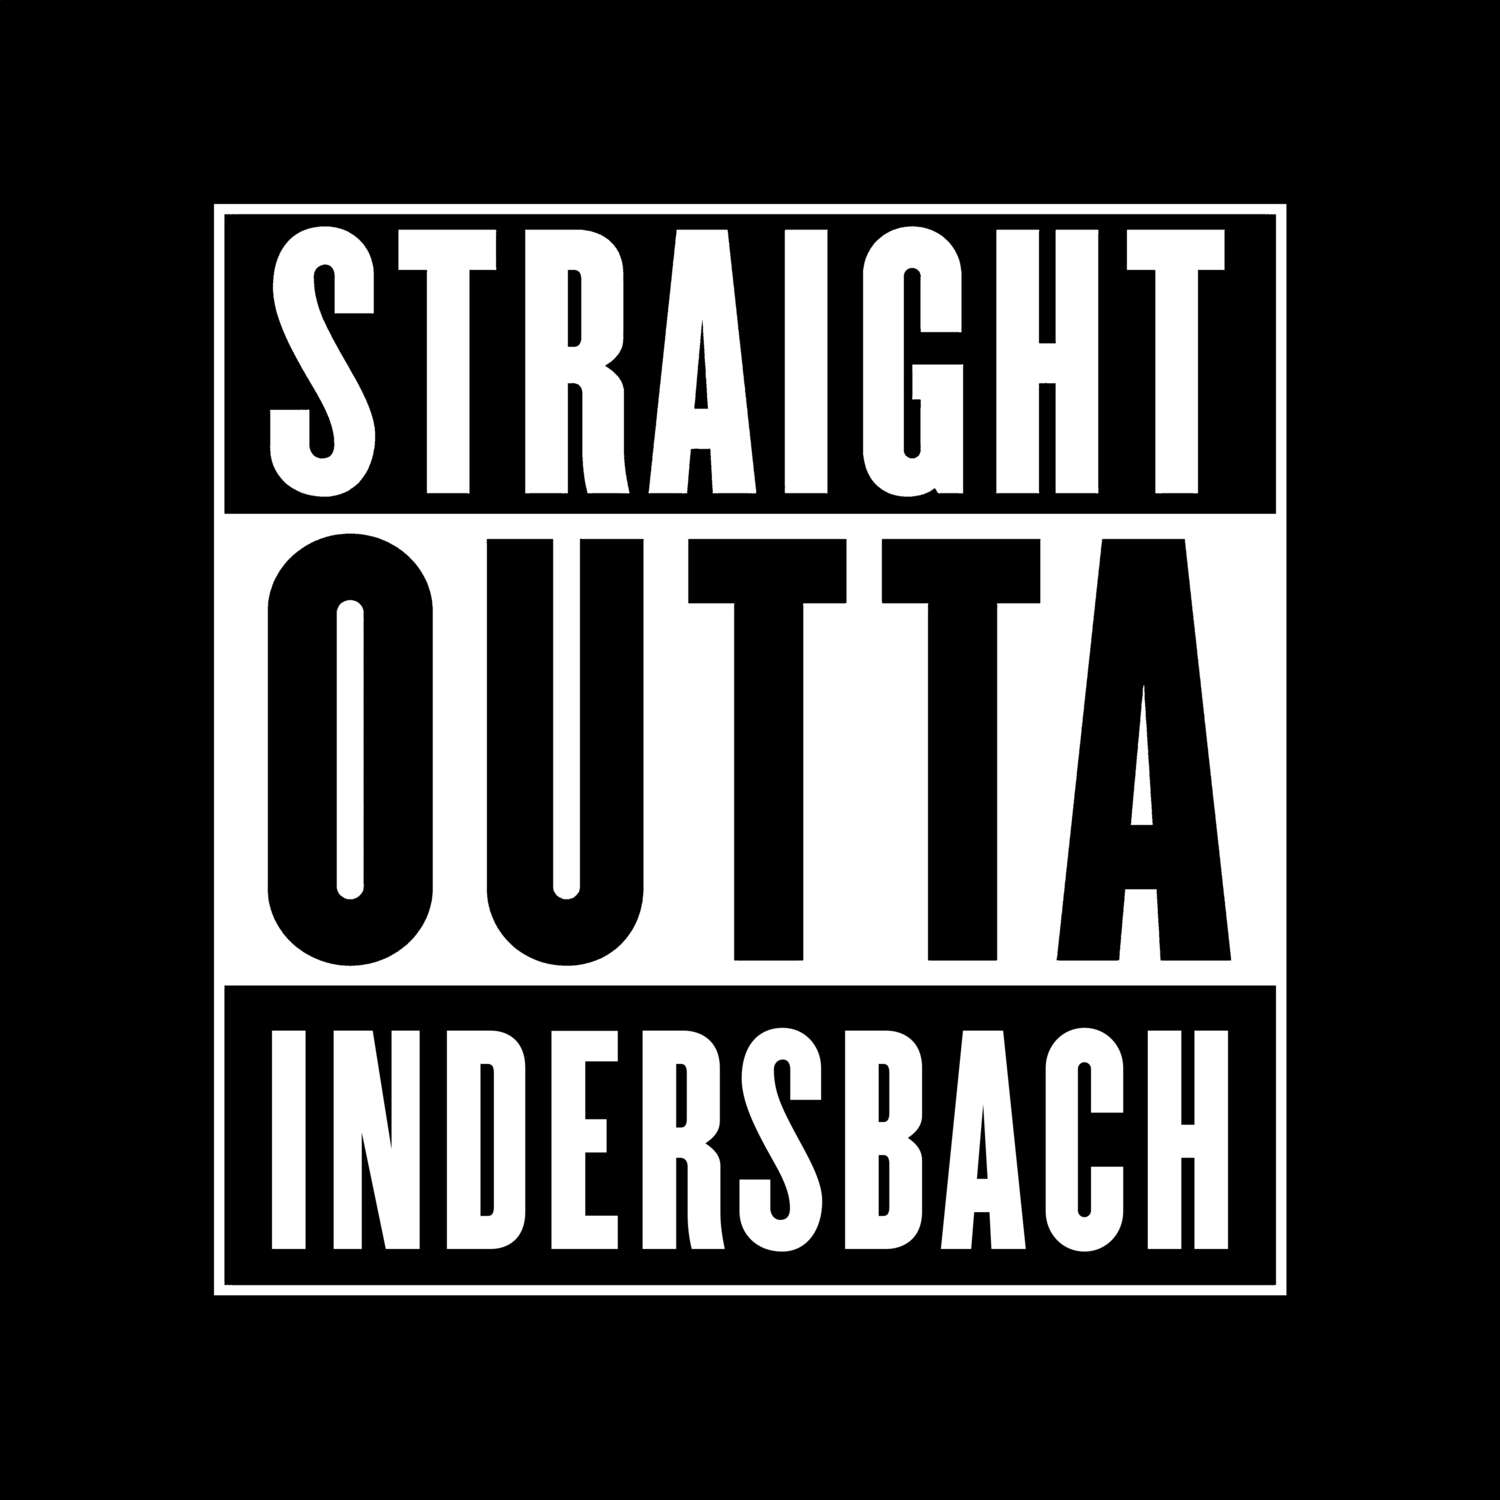 Indersbach T-Shirt »Straight Outta«